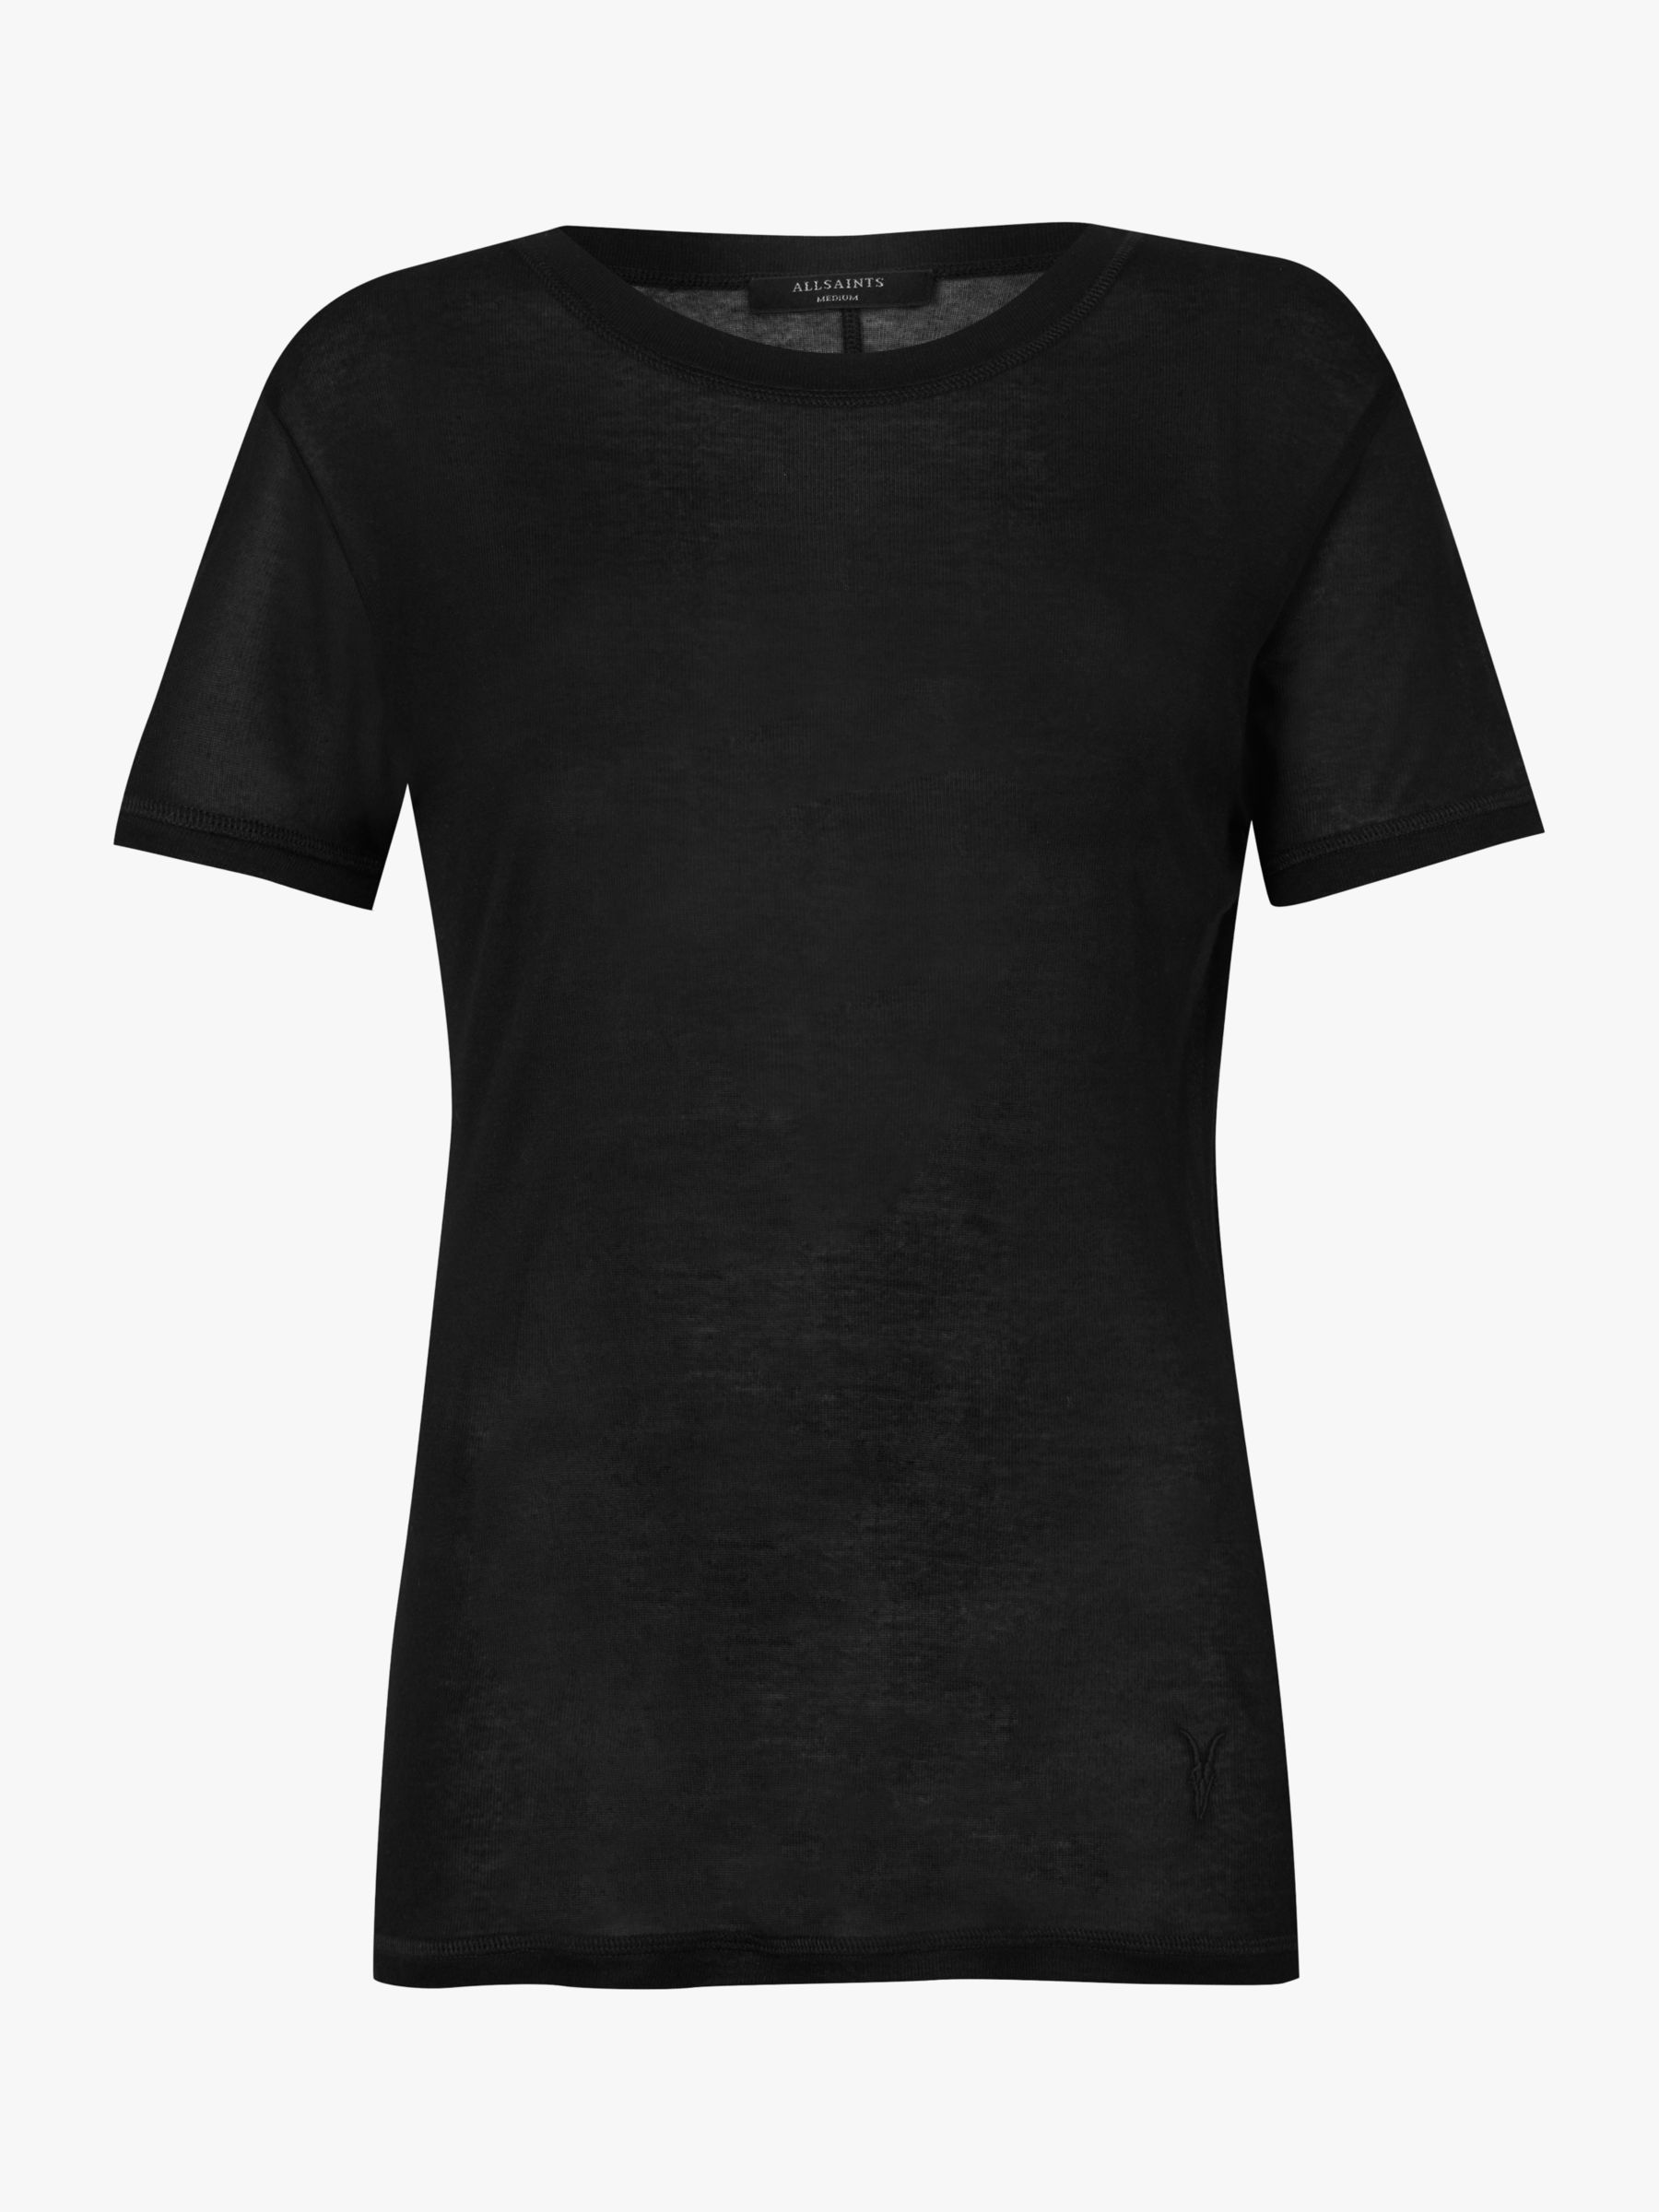 AllSaints Francesco Short Sleeve T-Shirt